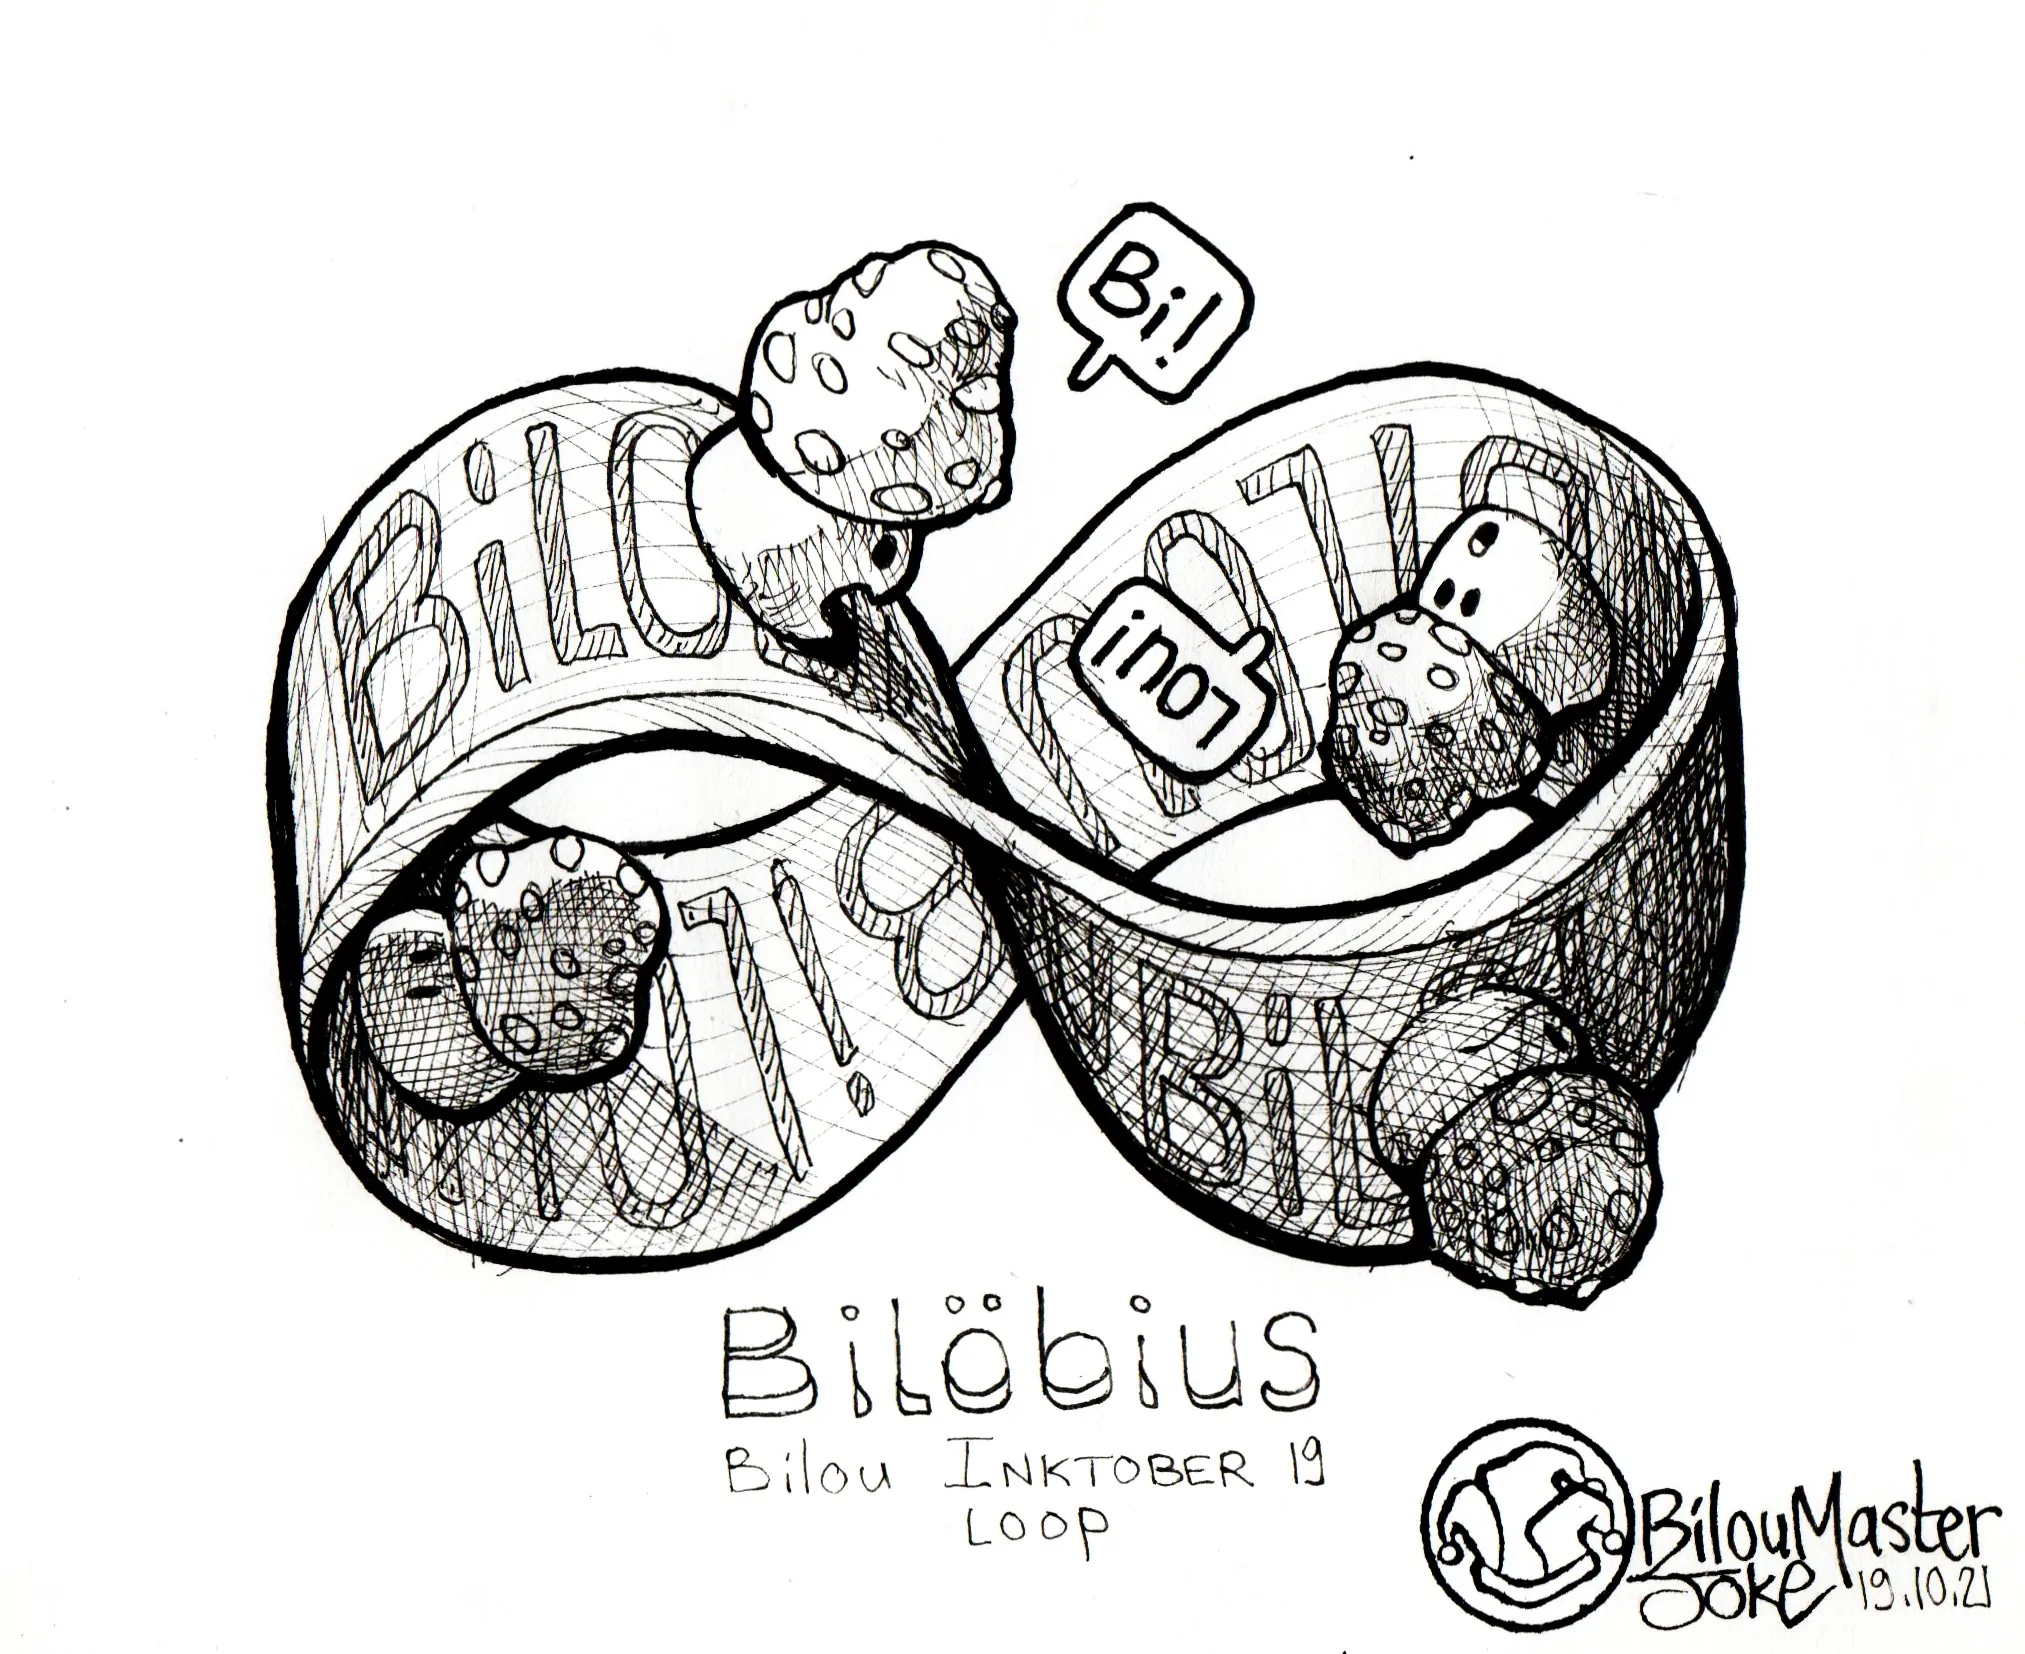 le zoli dessin « Bilöbius » que j'ai bilouté le 19 octobre 2021